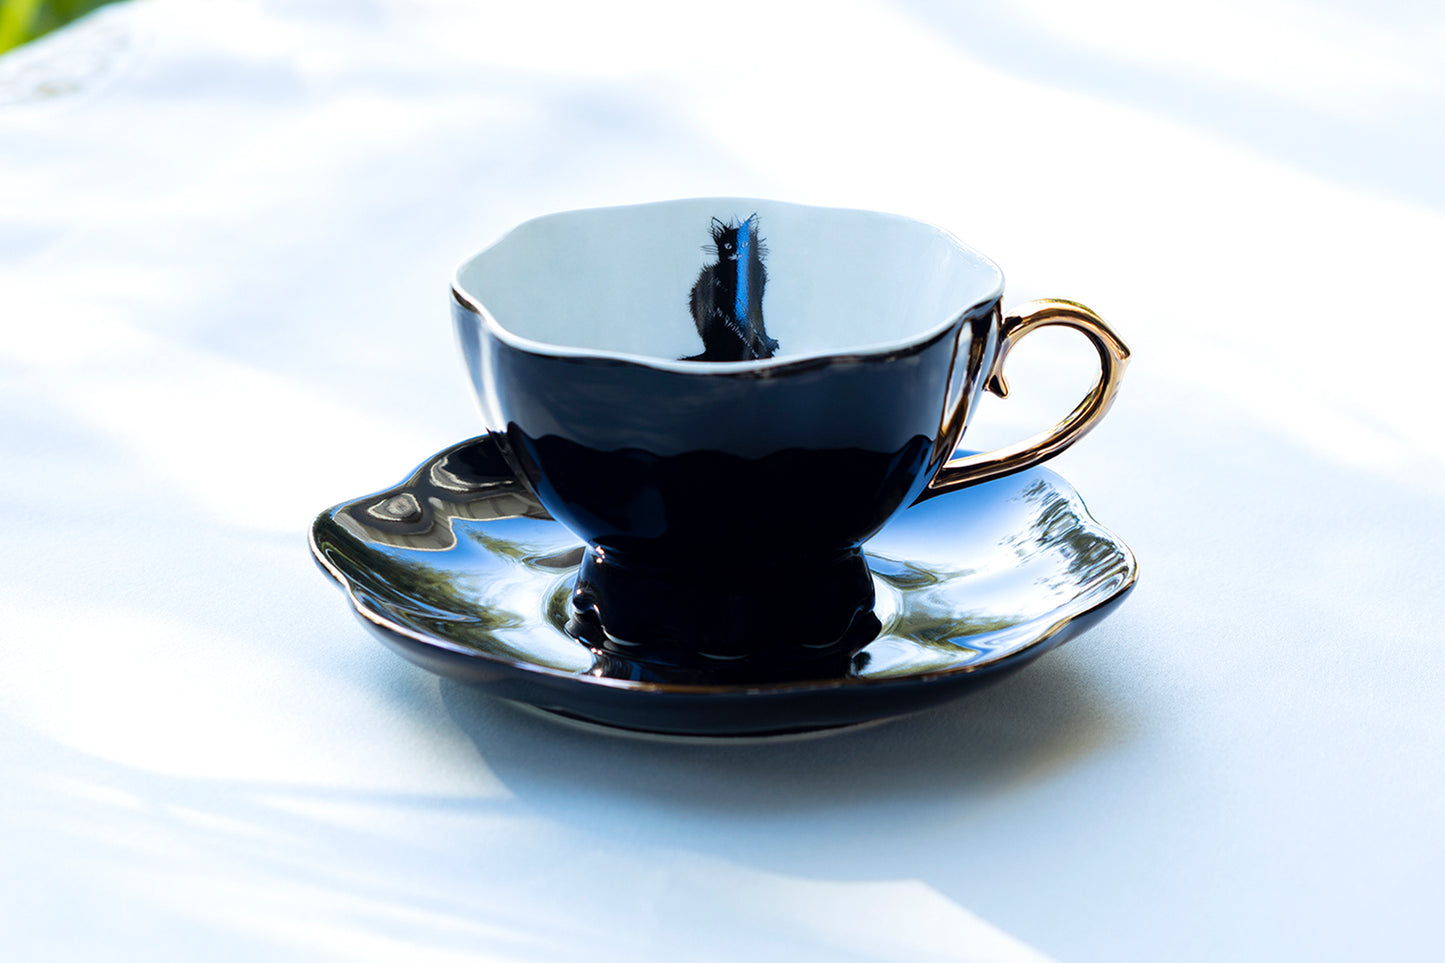 Black Cat Black Gold Tea Cup and Saucer